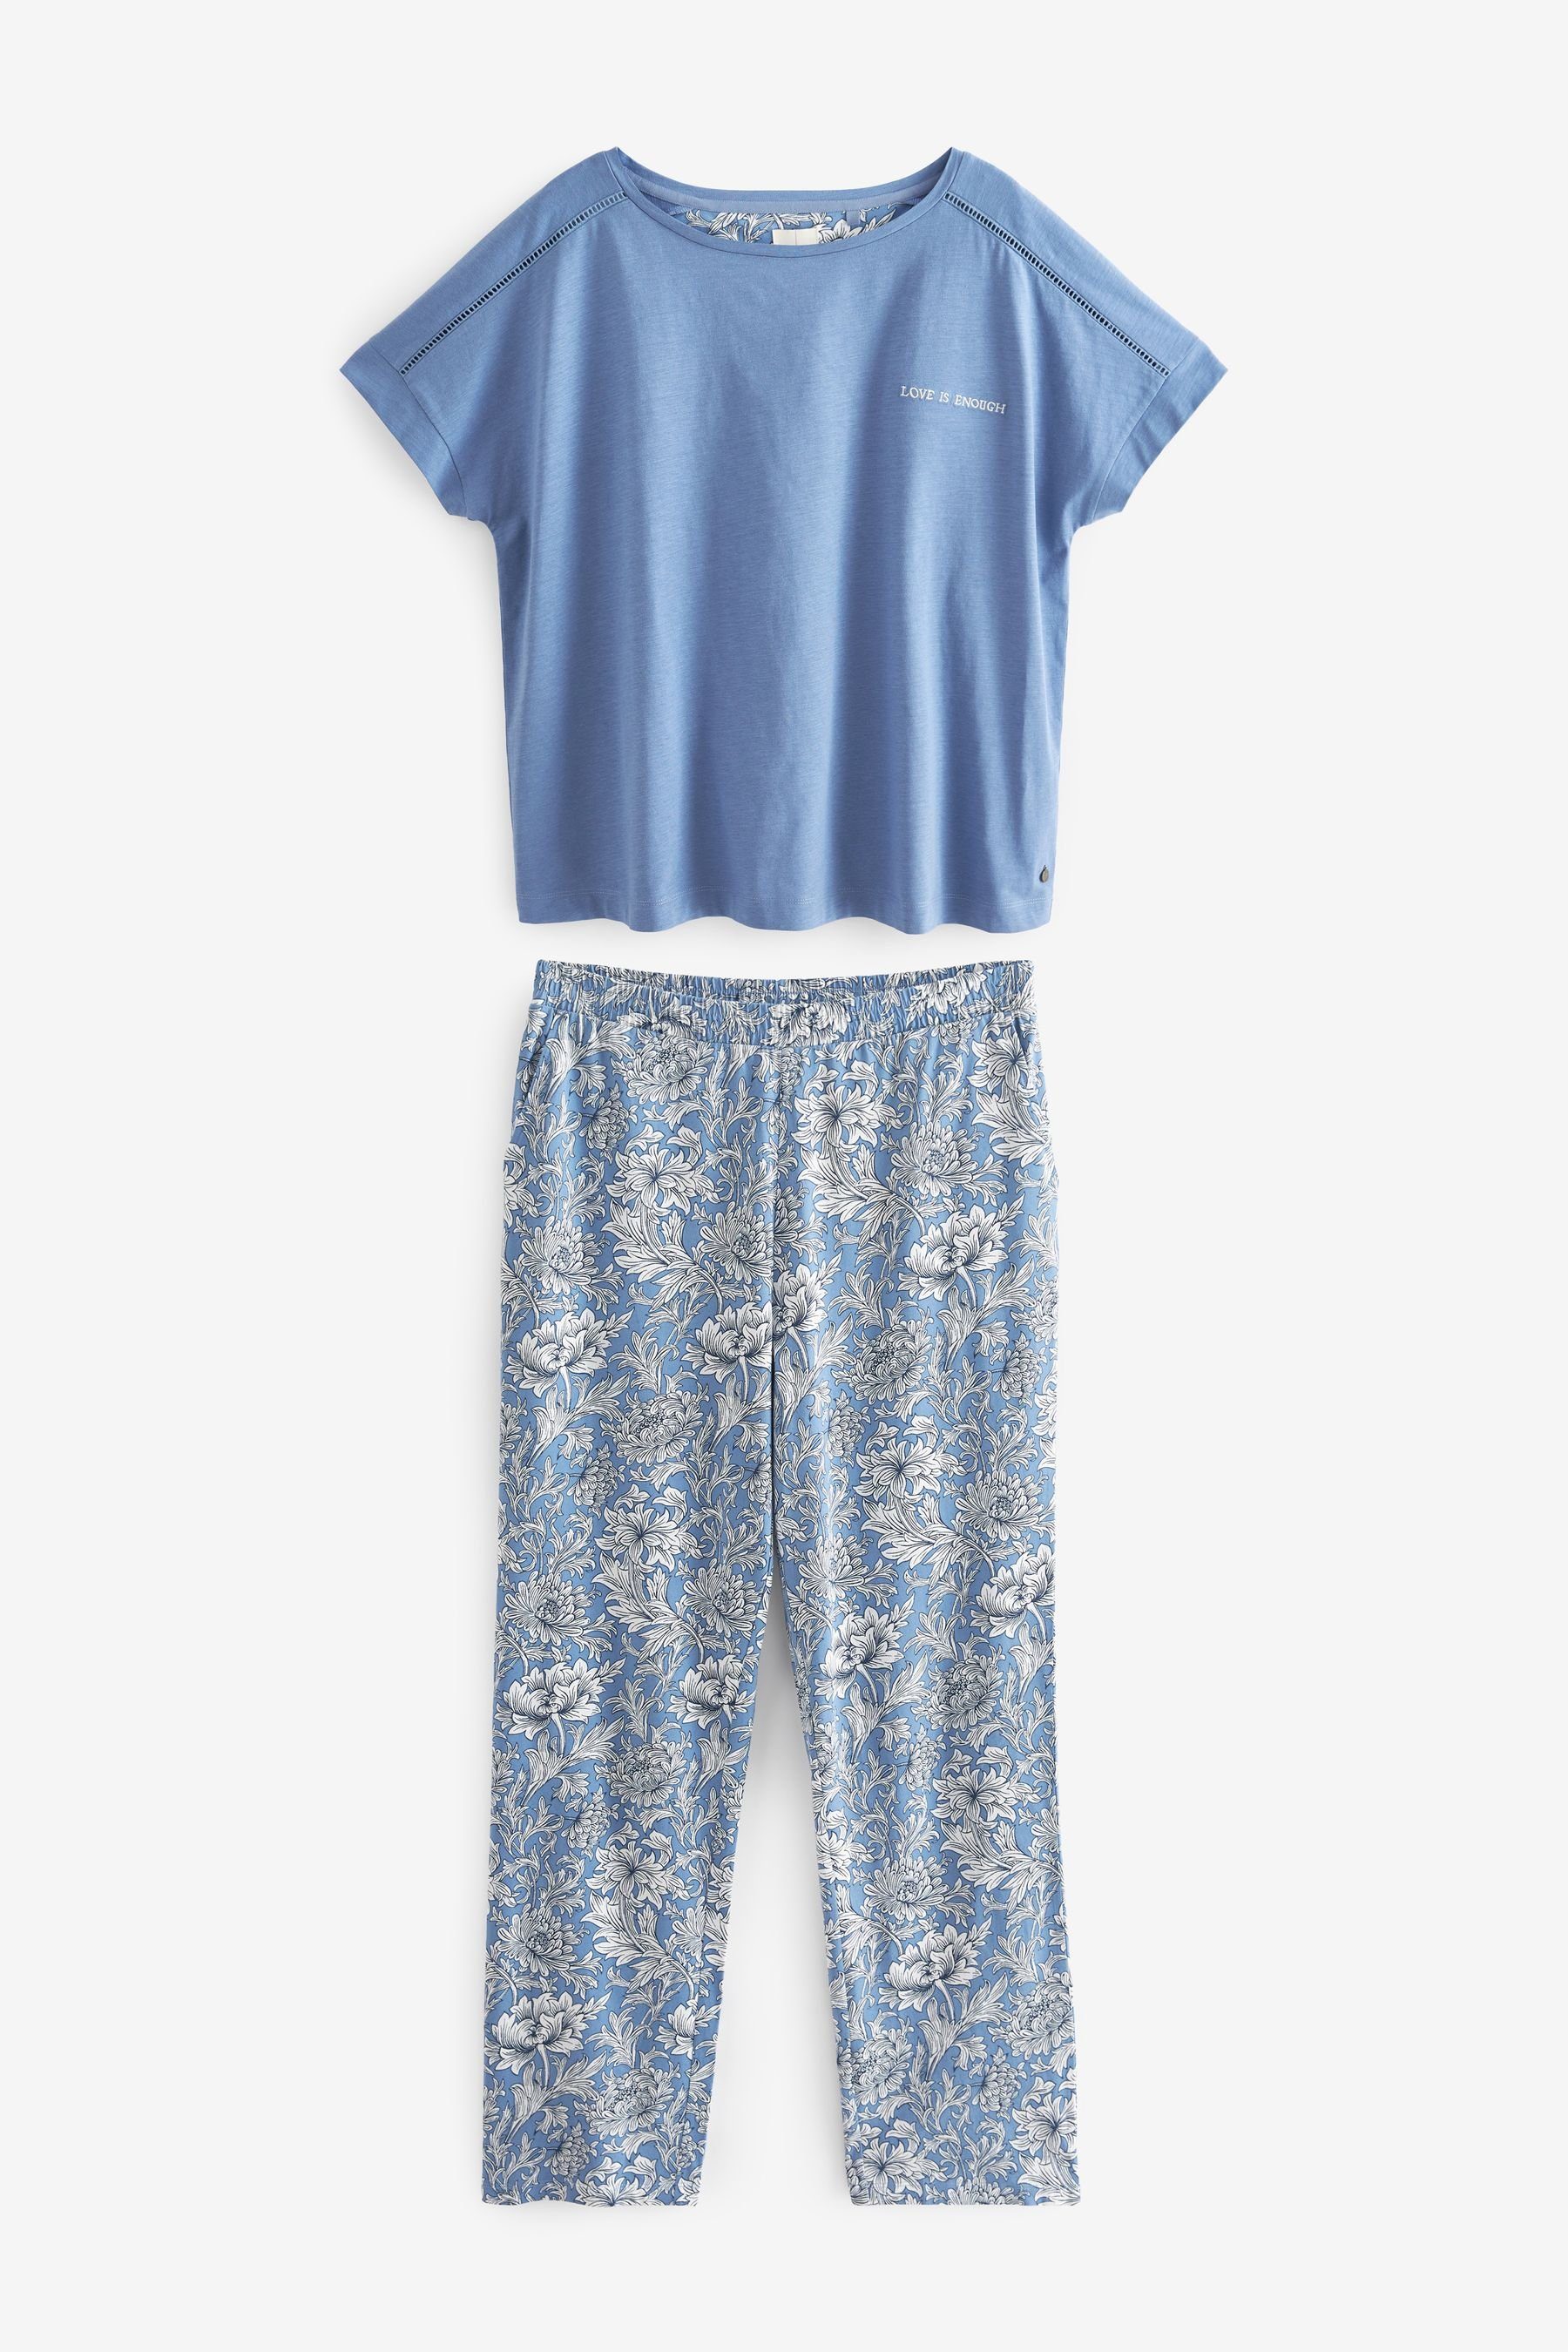 Next Pyjama Morris & Co. at Next Baumwolljersey-Schlafanzug (2 tlg) Morris & Co Blue Floral